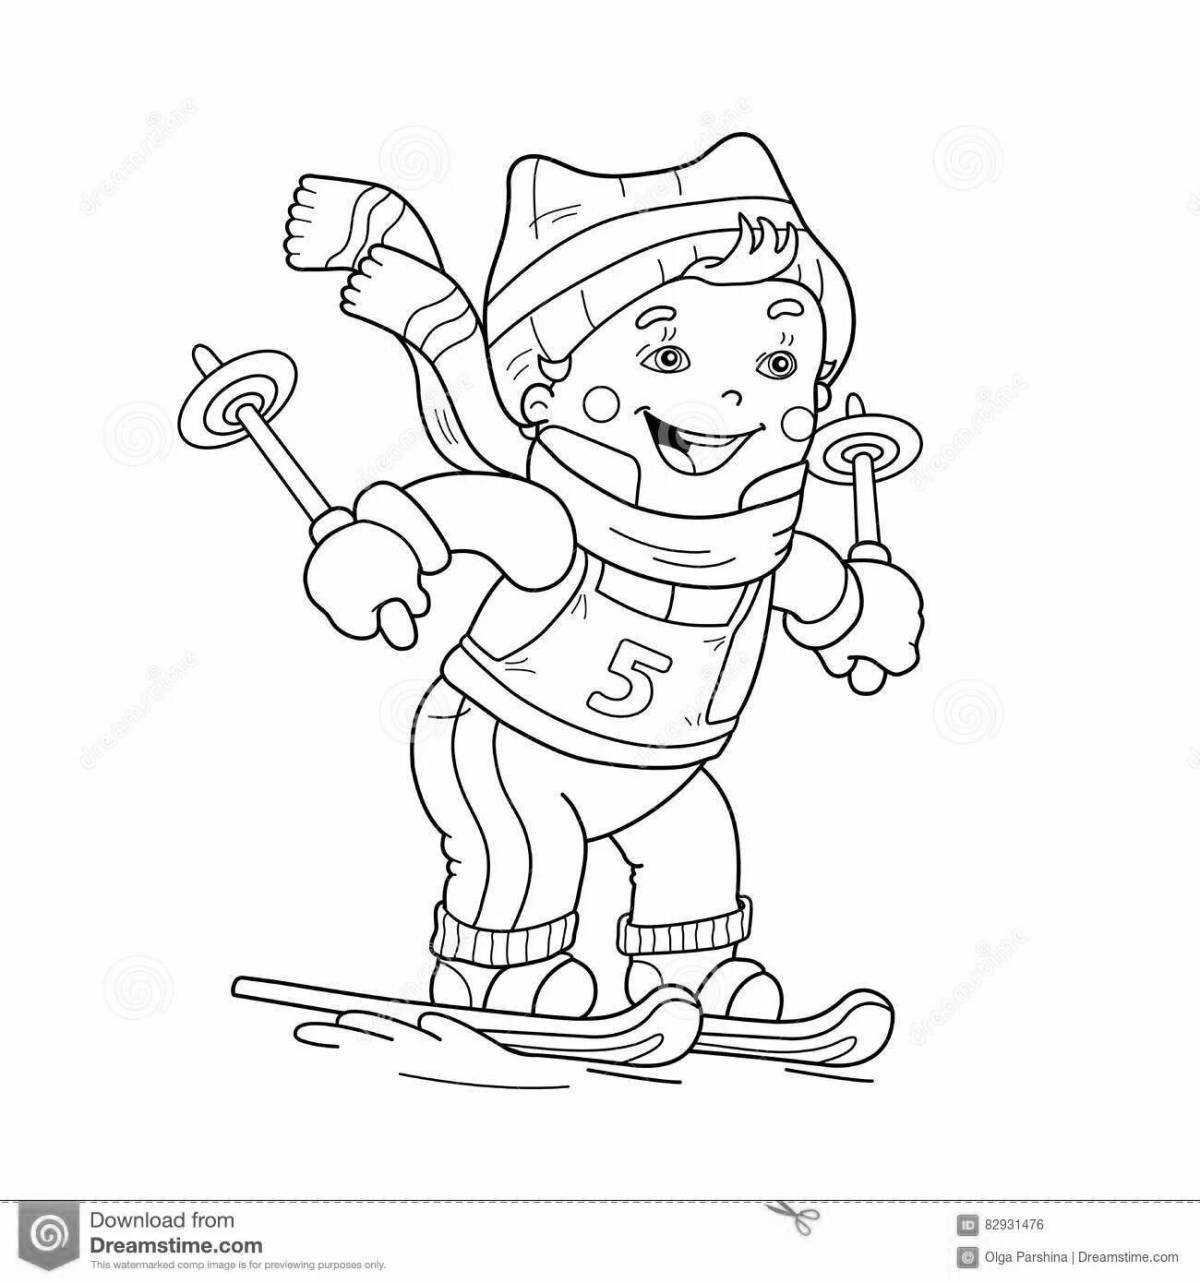 Coloring book of a joyful skier for preschoolers